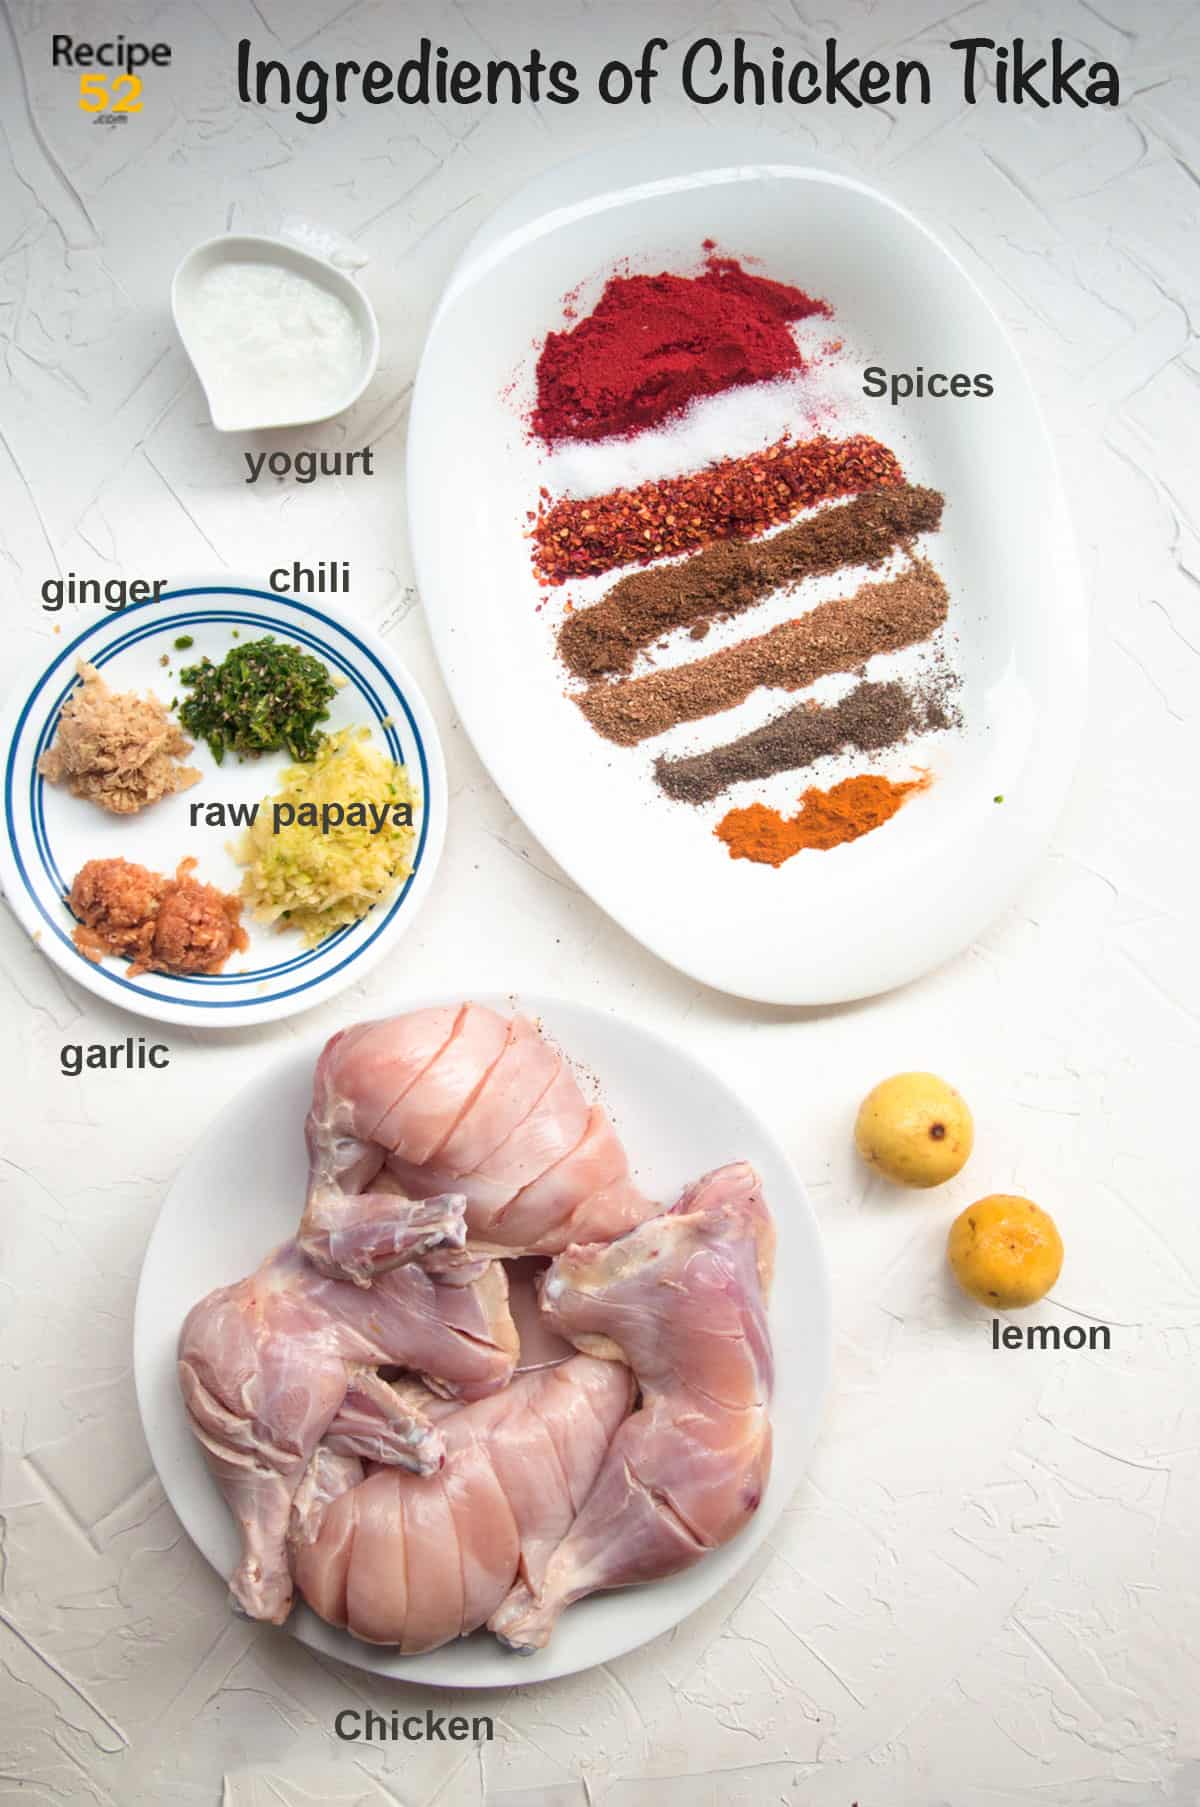 Ingredients for making chicken tikka.